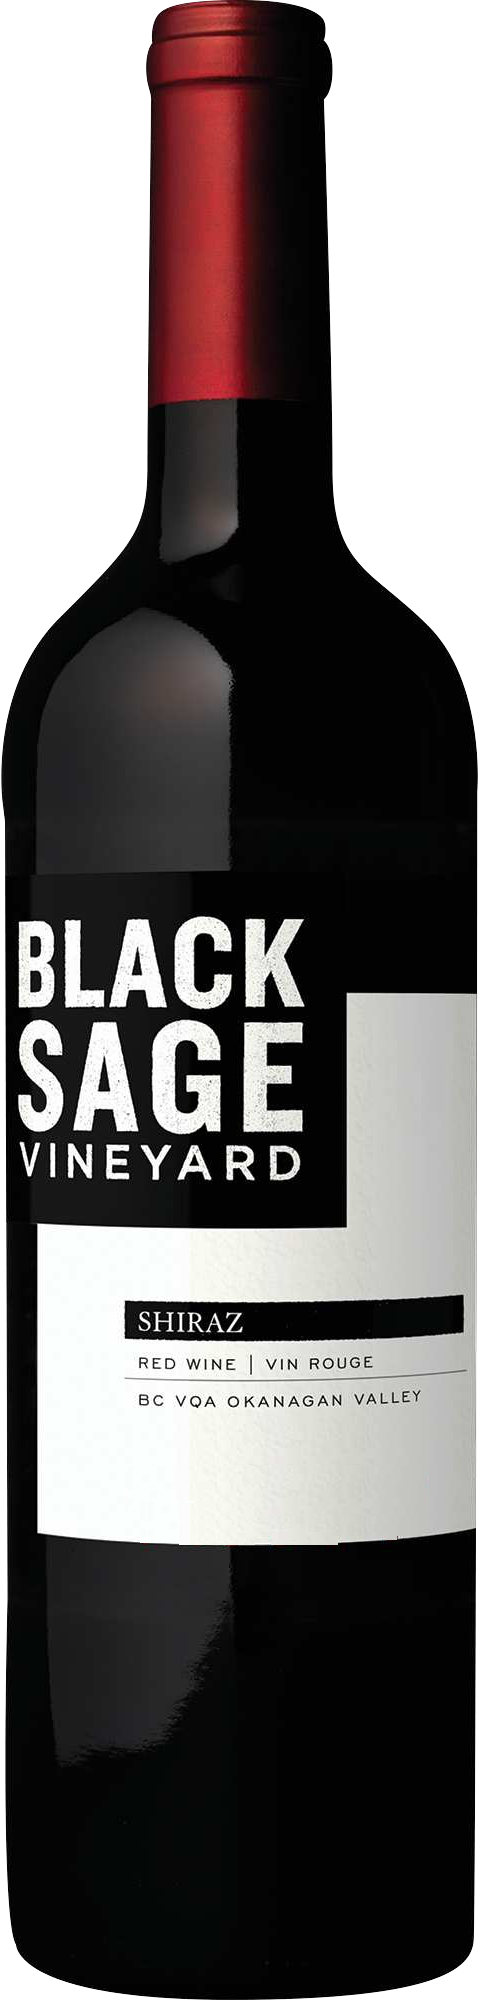 Black Sage Vineyard Shiraz 2019 Black Sage Vineyard 8wines DACH